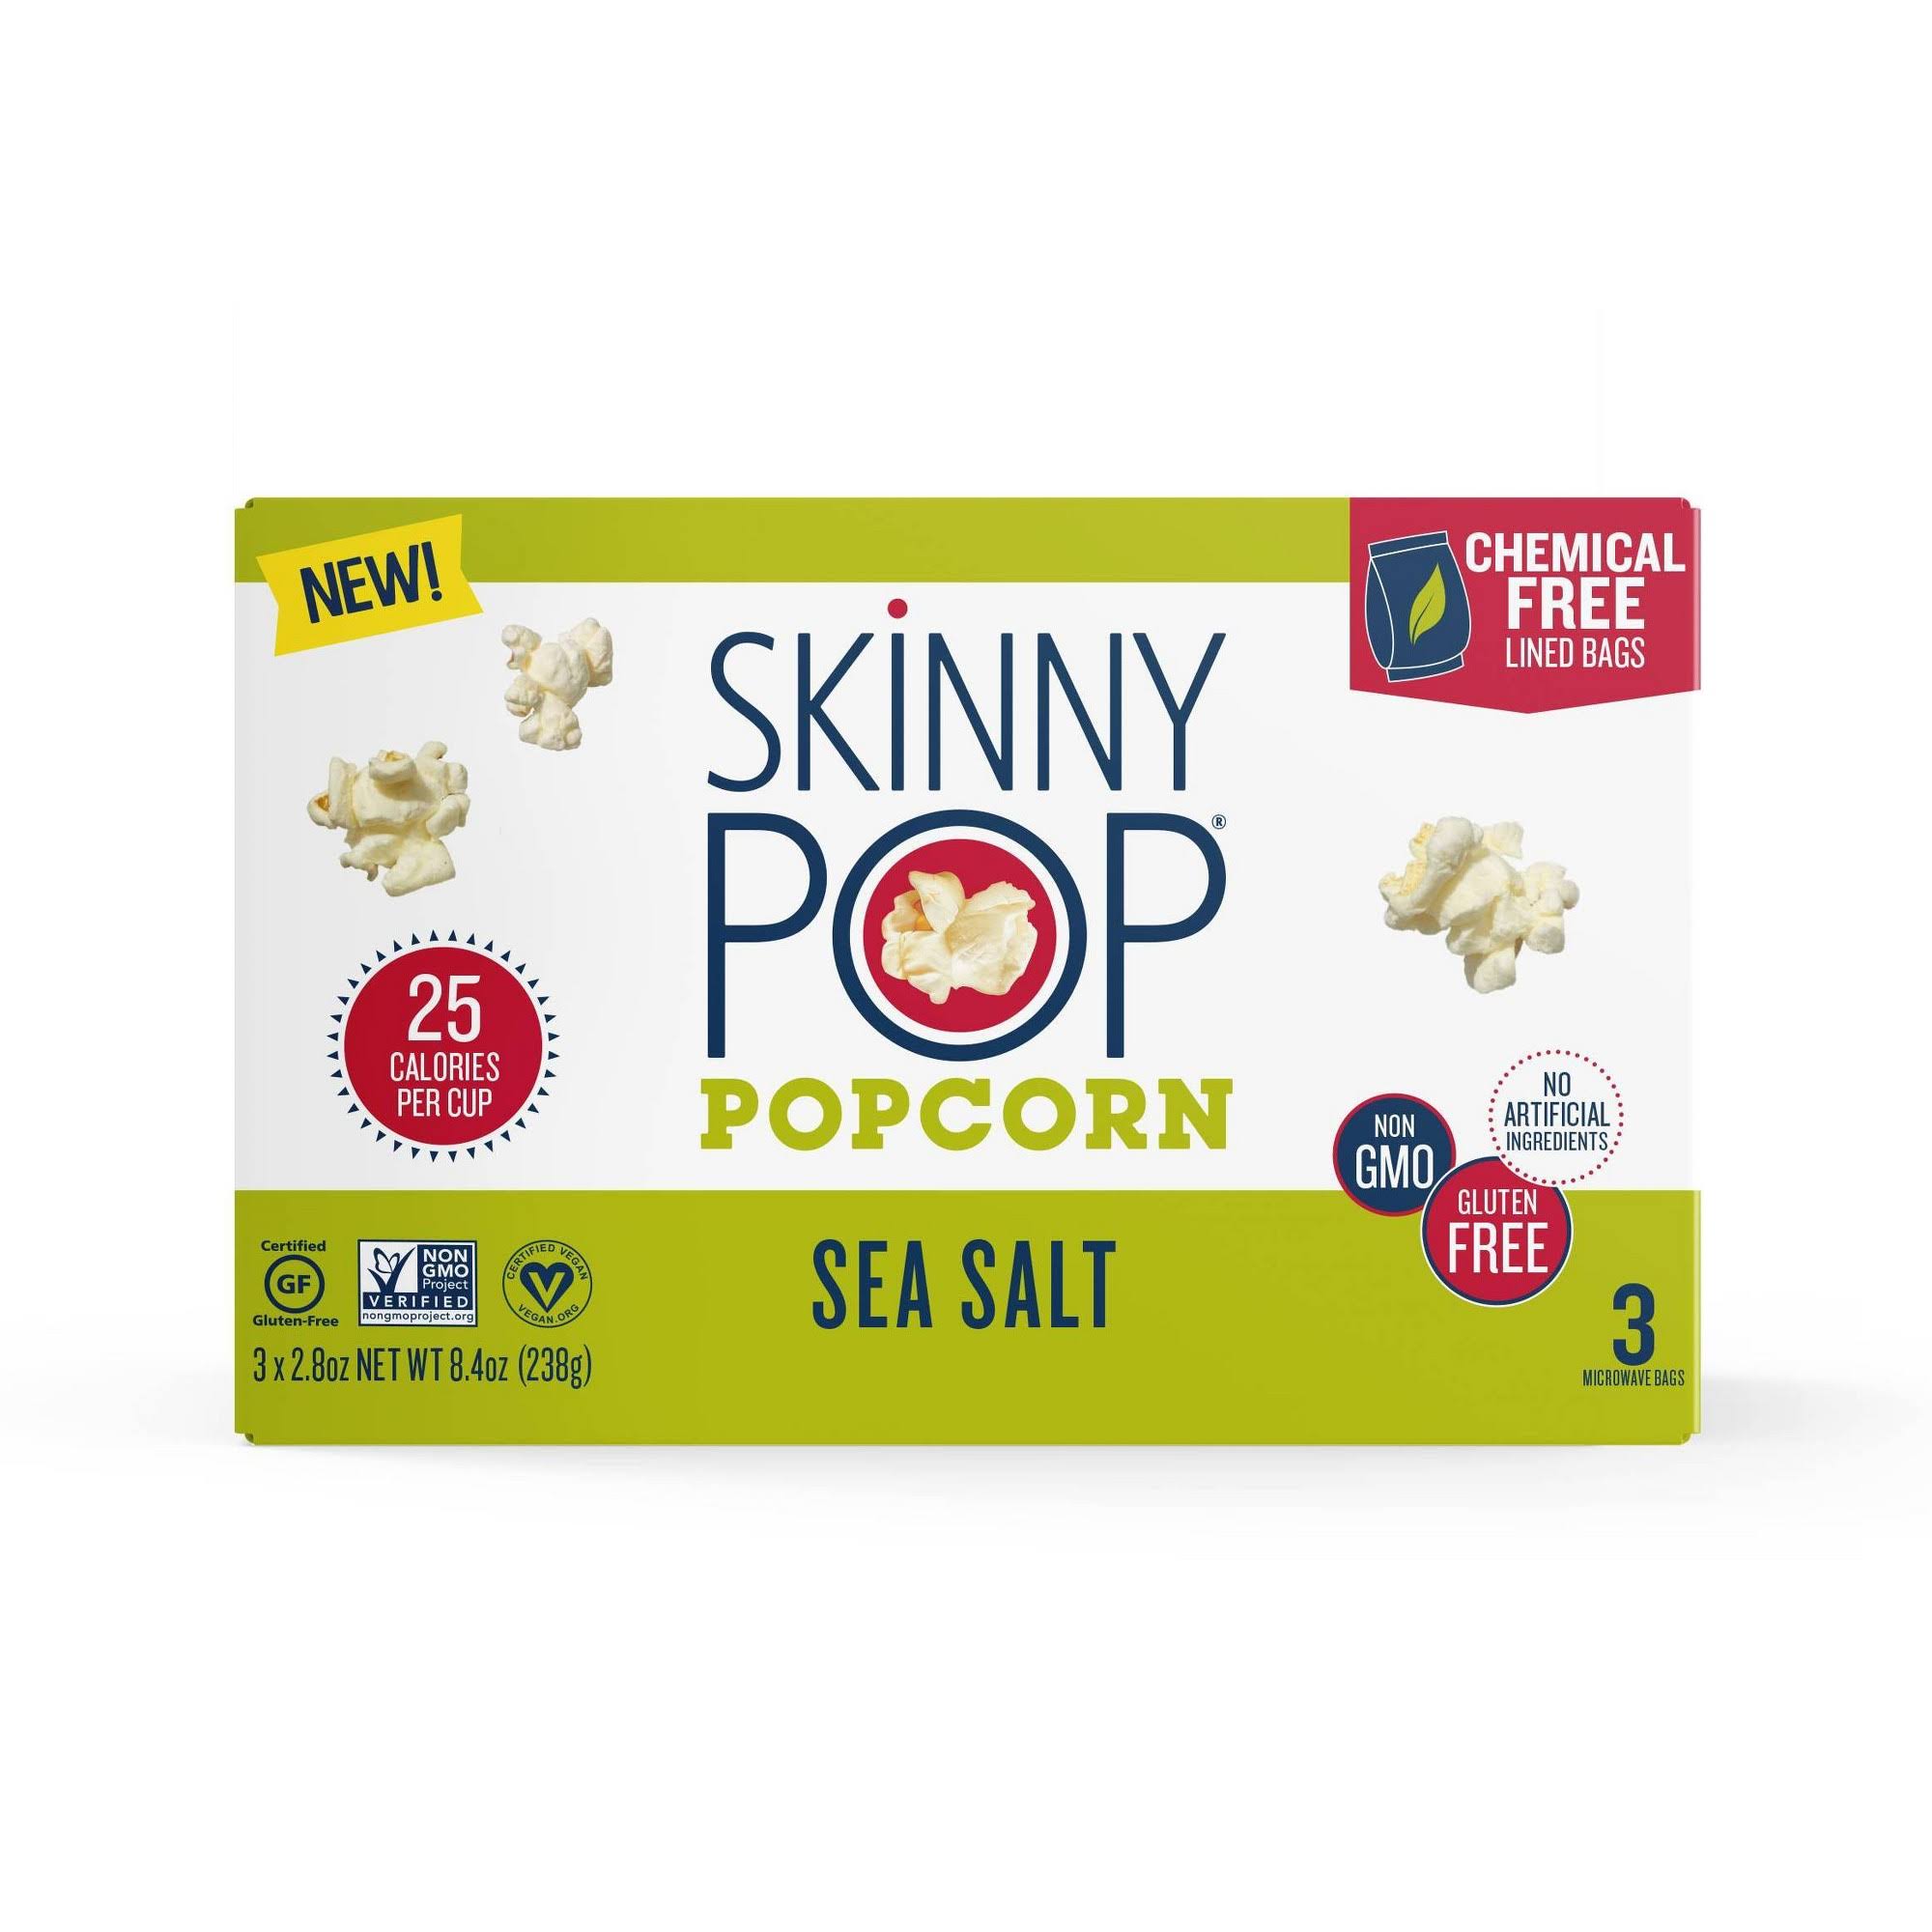 Skinny Pop Popcorn, Sea Salt - 3 pack, 2.8 oz bags